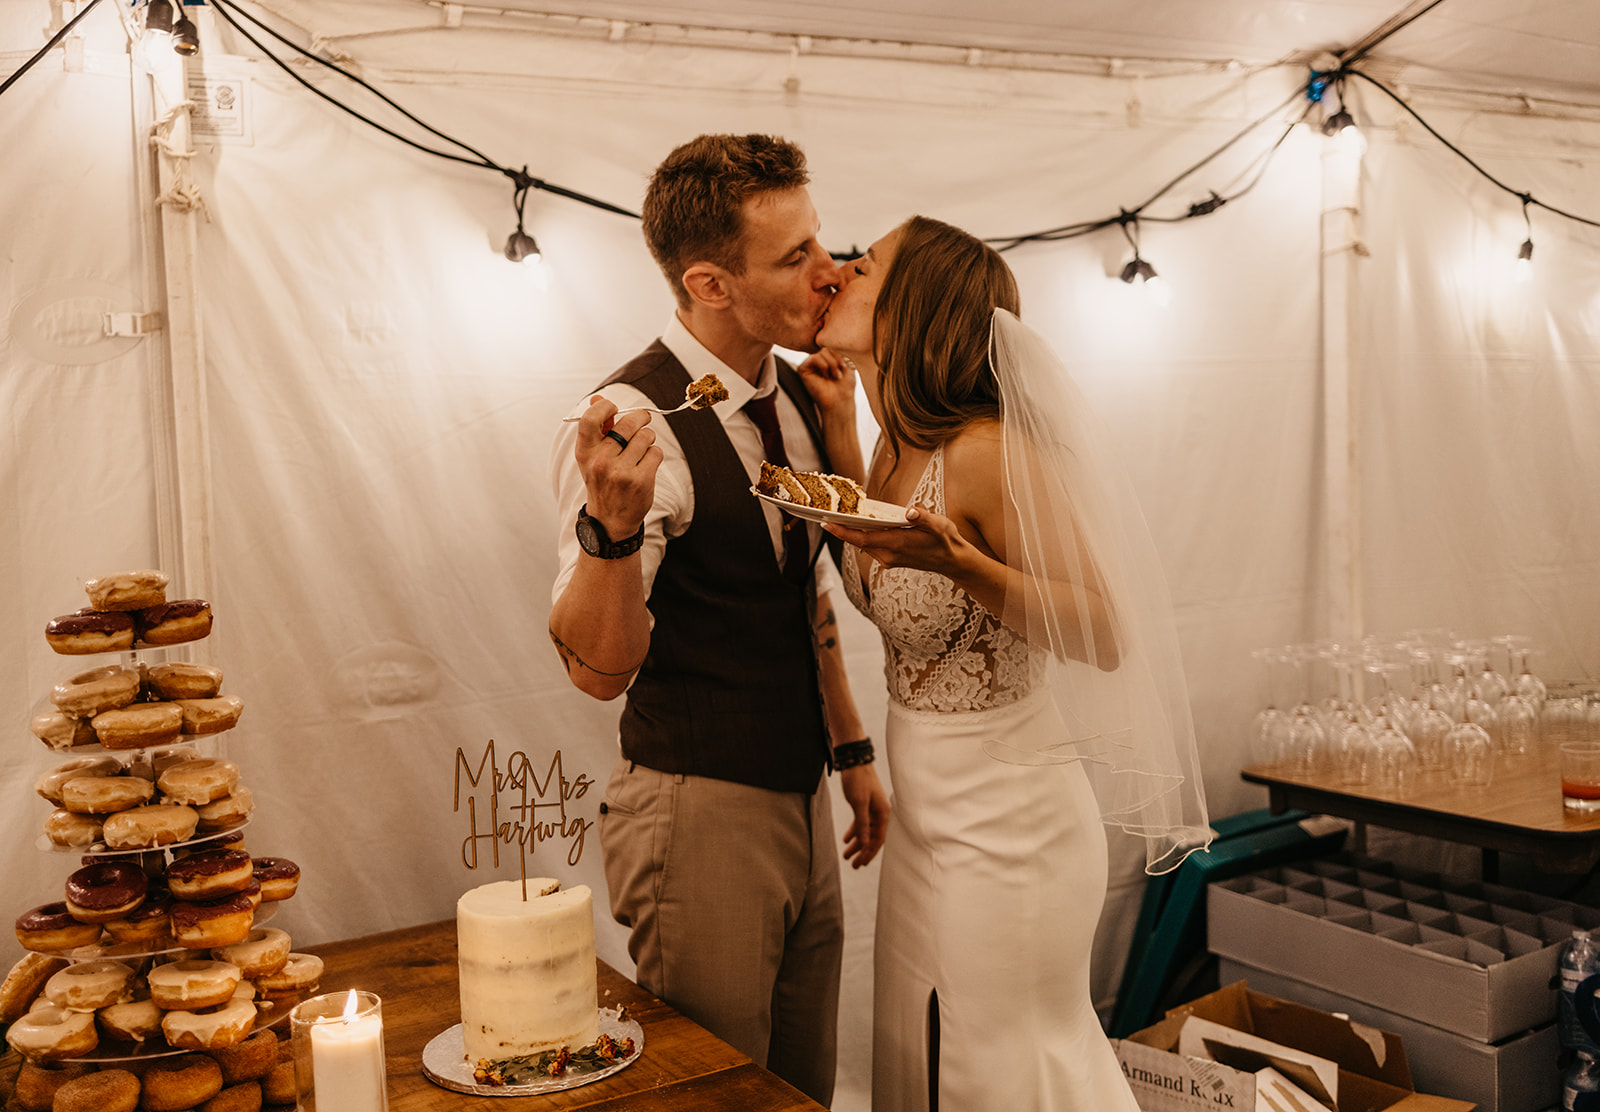 Maddie Lymburner and Chris Hartwig's cut their wedding cake